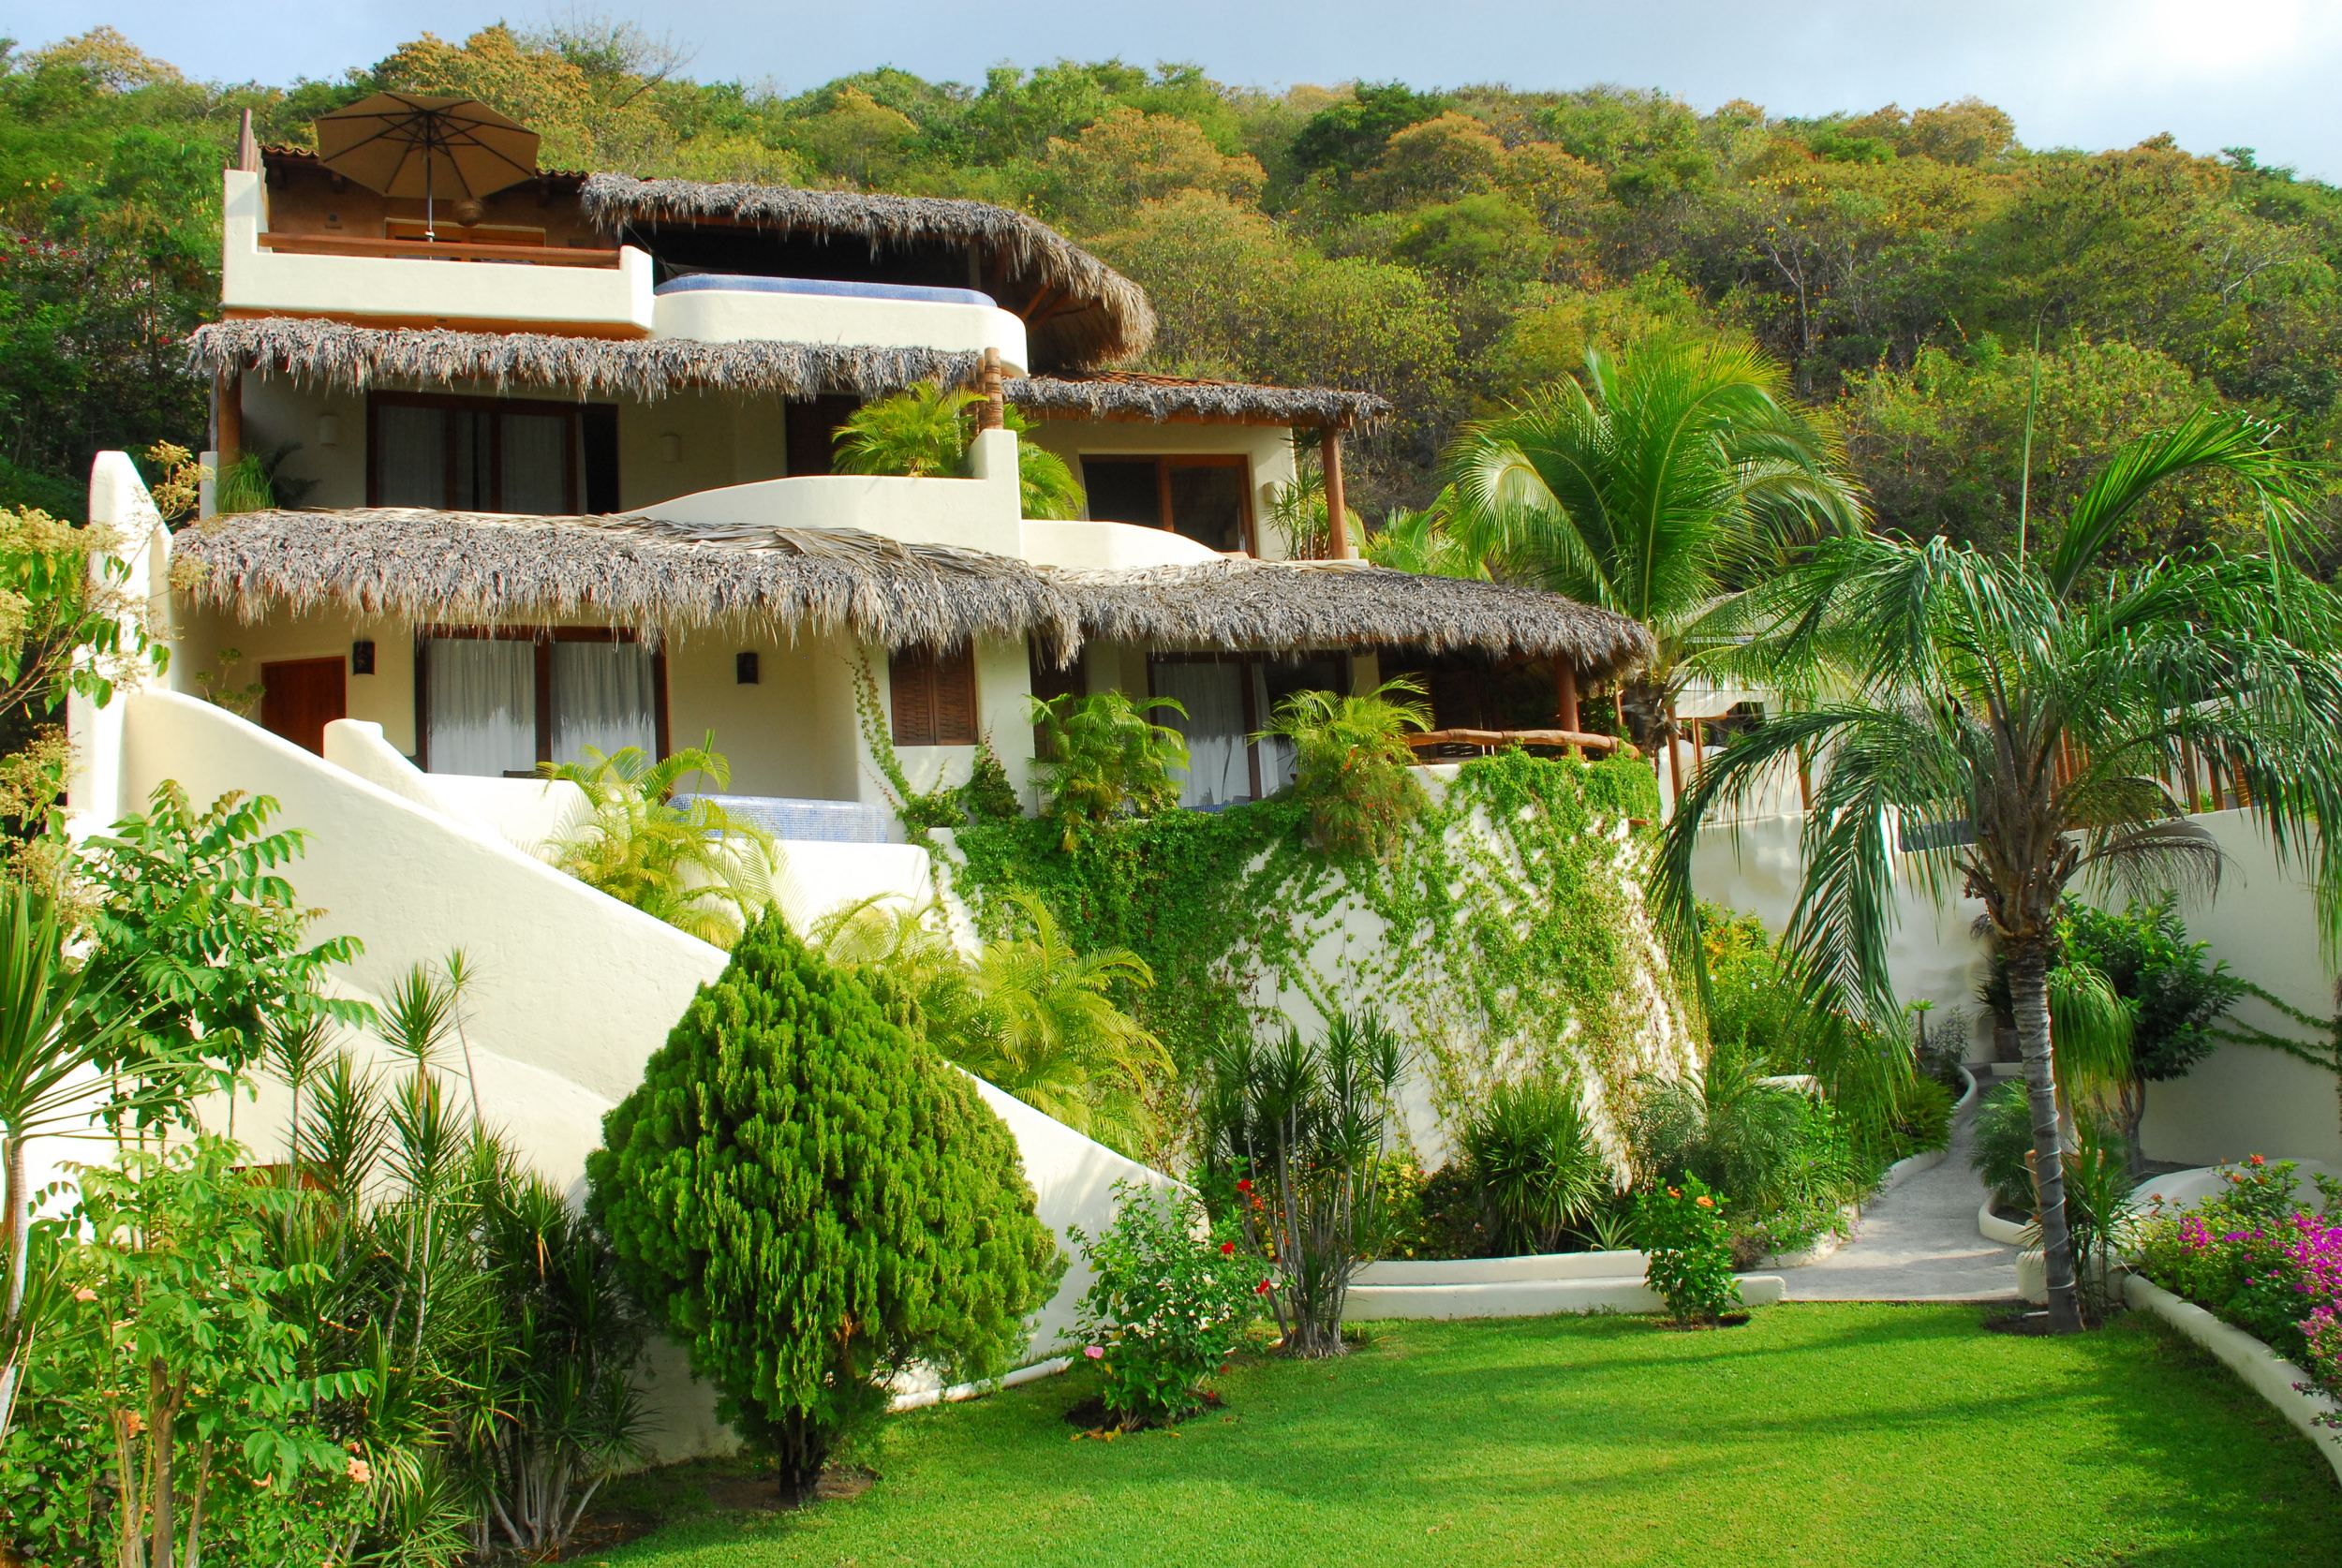 cinco-sentidos-hotel-zihuatanejo-mexico-properties-homes-for-sale.jpg